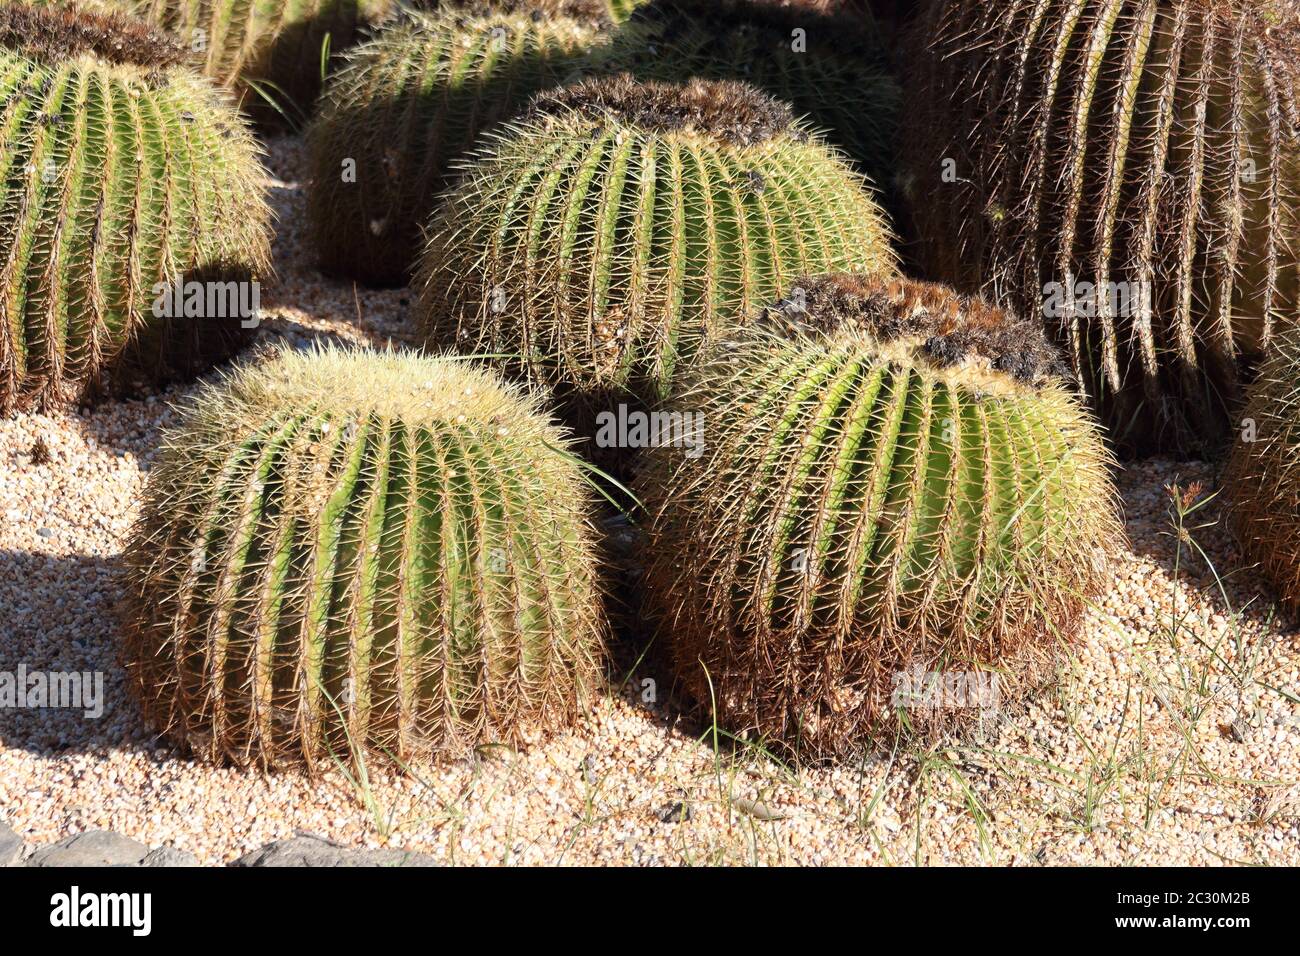 Echinocactus grusonii, Golden barrel cactus, golden ball cactus in Parque Paloma, Benalmadena, Spain Stock Photo